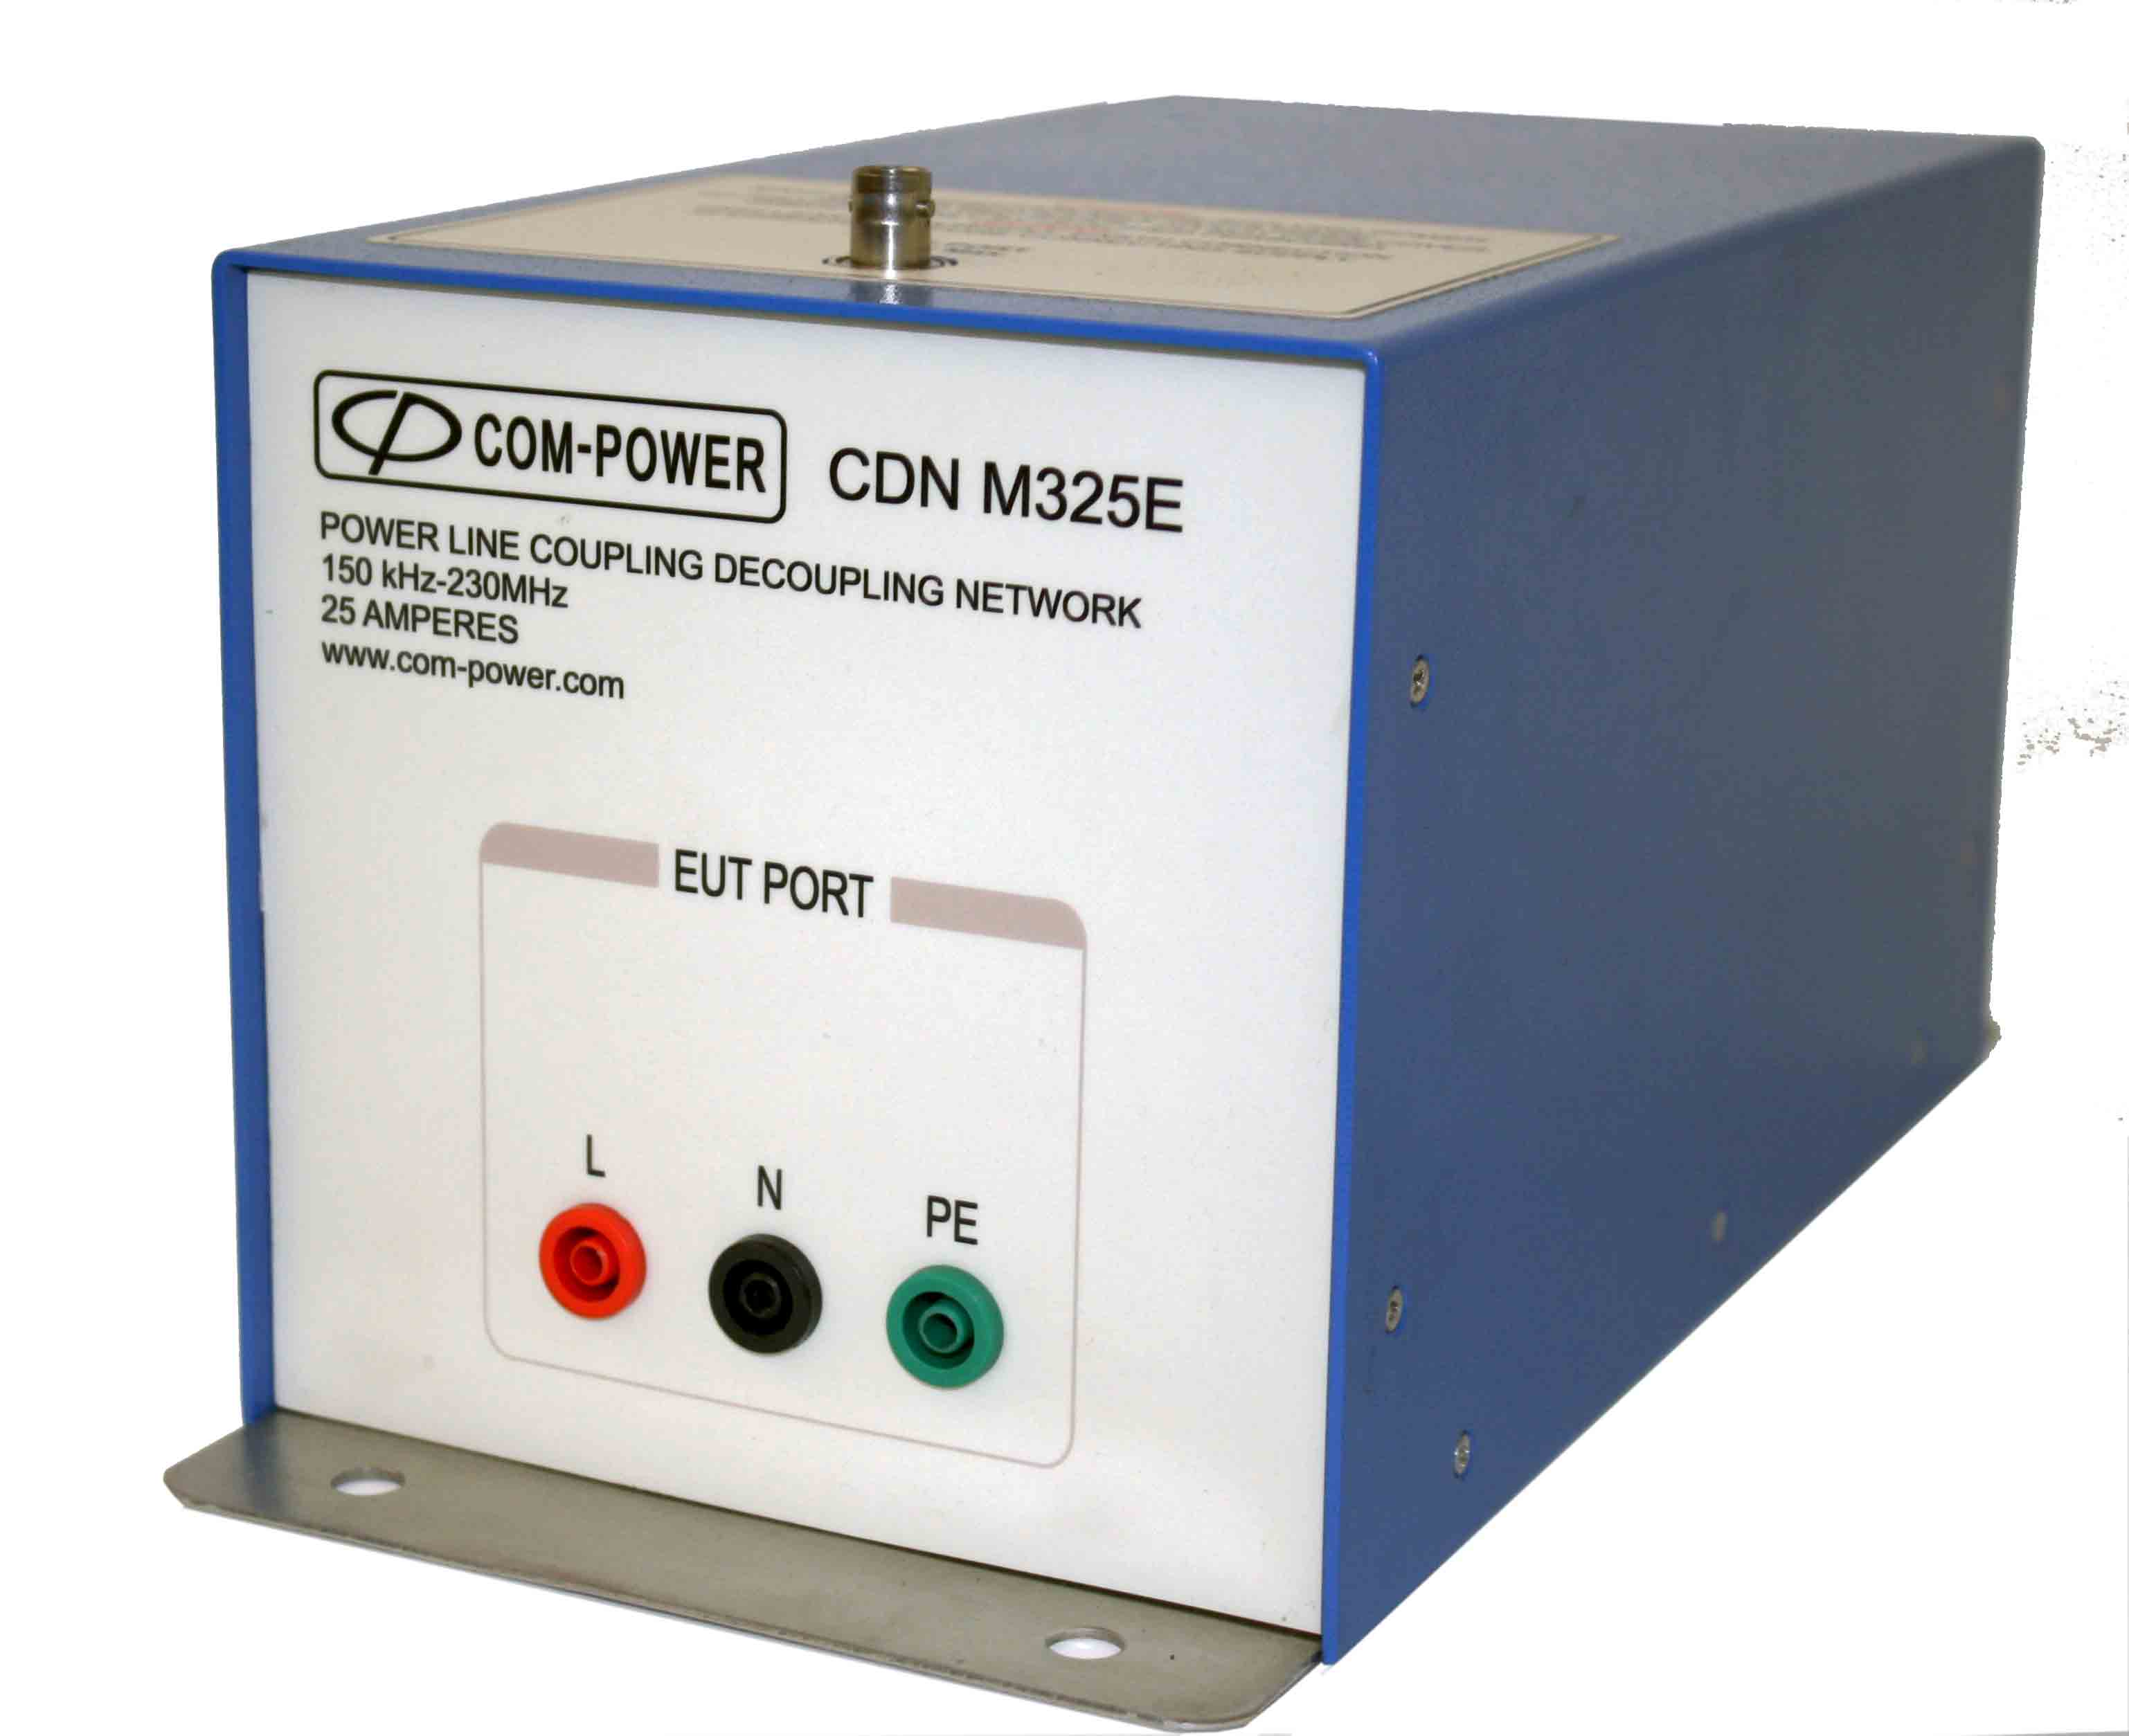 CDN-M325E - Com-Power CDN Coupling Decoupling Networks